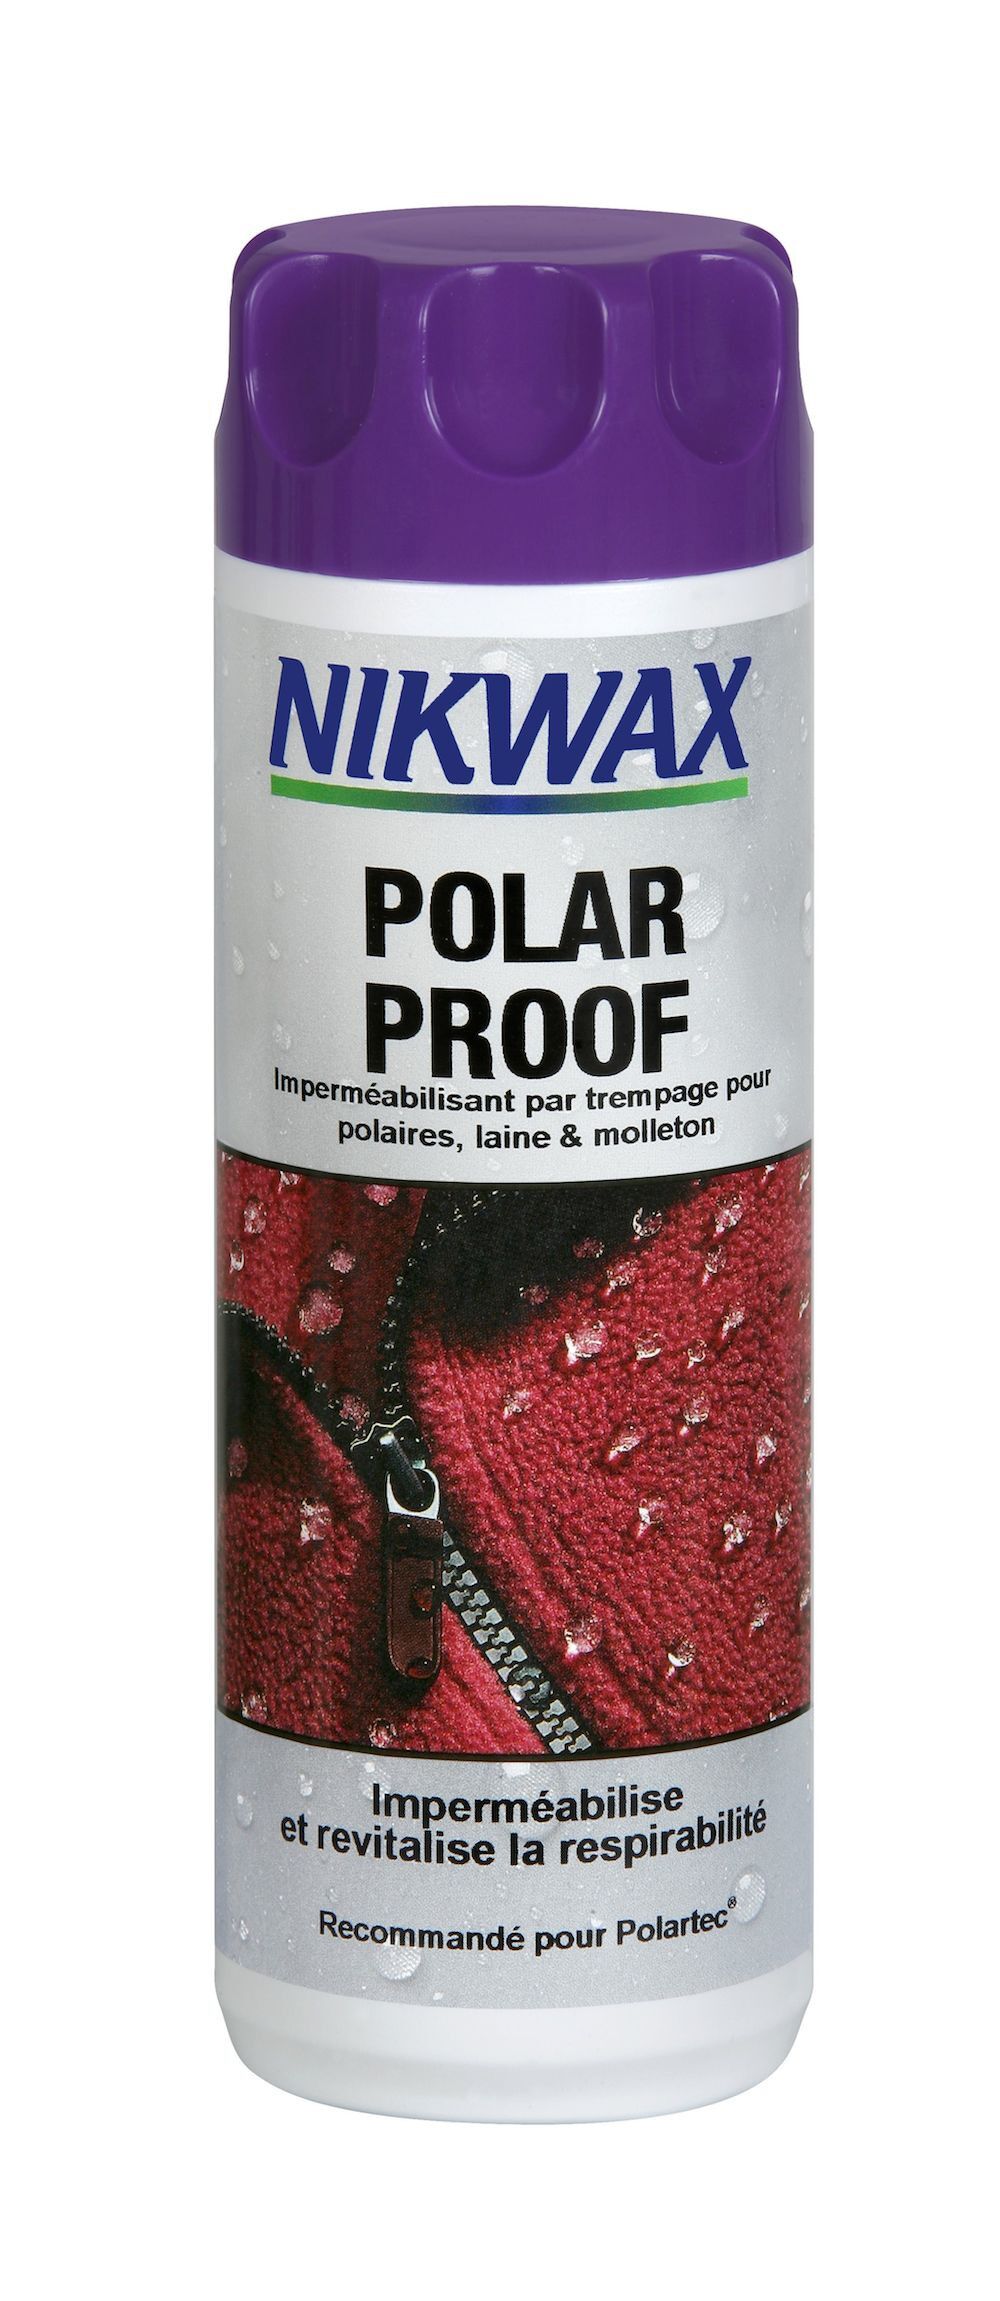 Nikwax - Polar Proof - Dry treatment